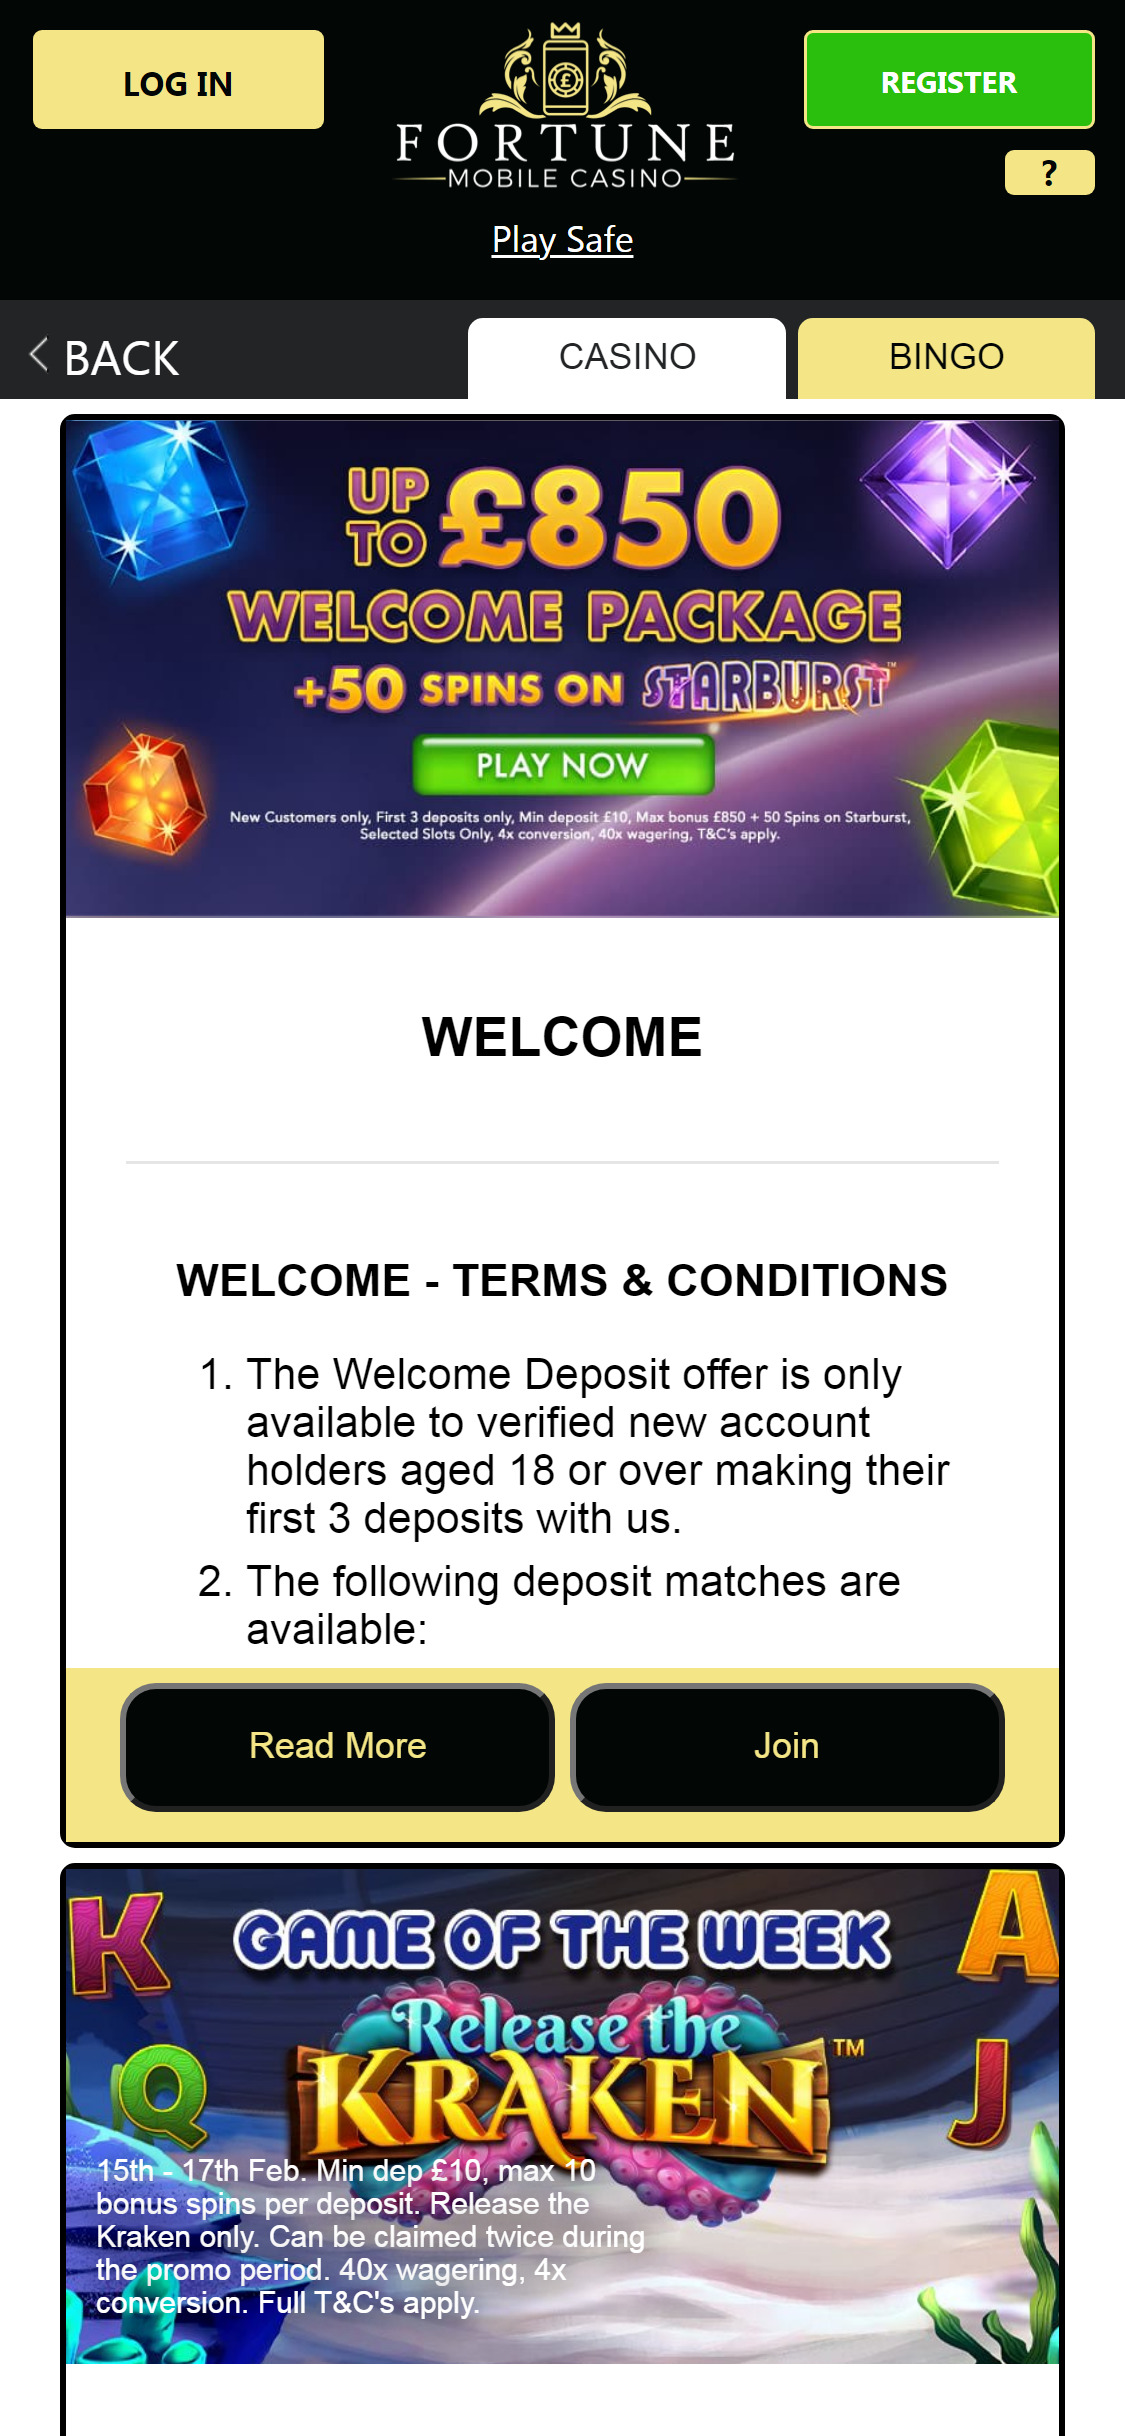 Fortune Mobile Casino Mobile No Deposit Bonus Review